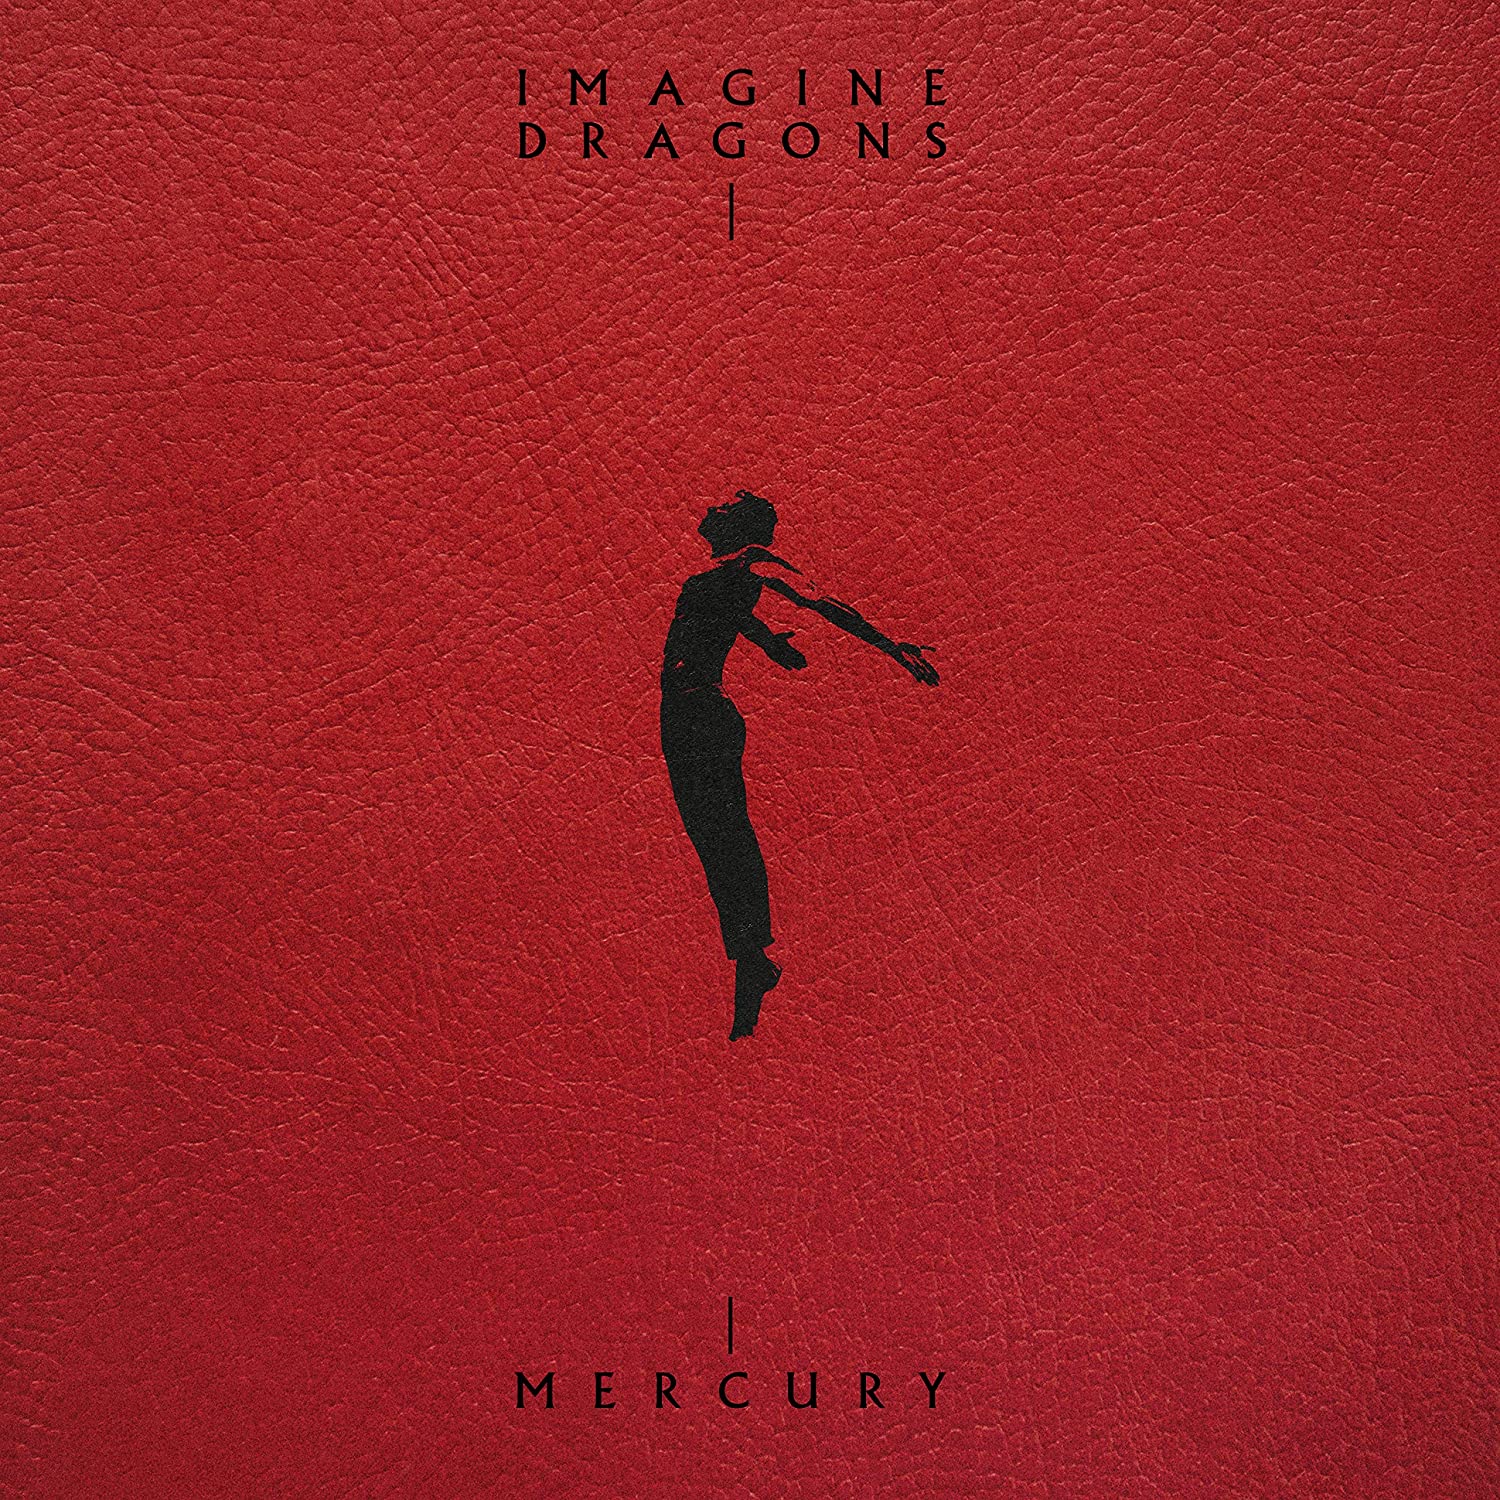 Imagine Dragons - Mercury - Act 1 & 2 (Deluxe Edition - 2CD)